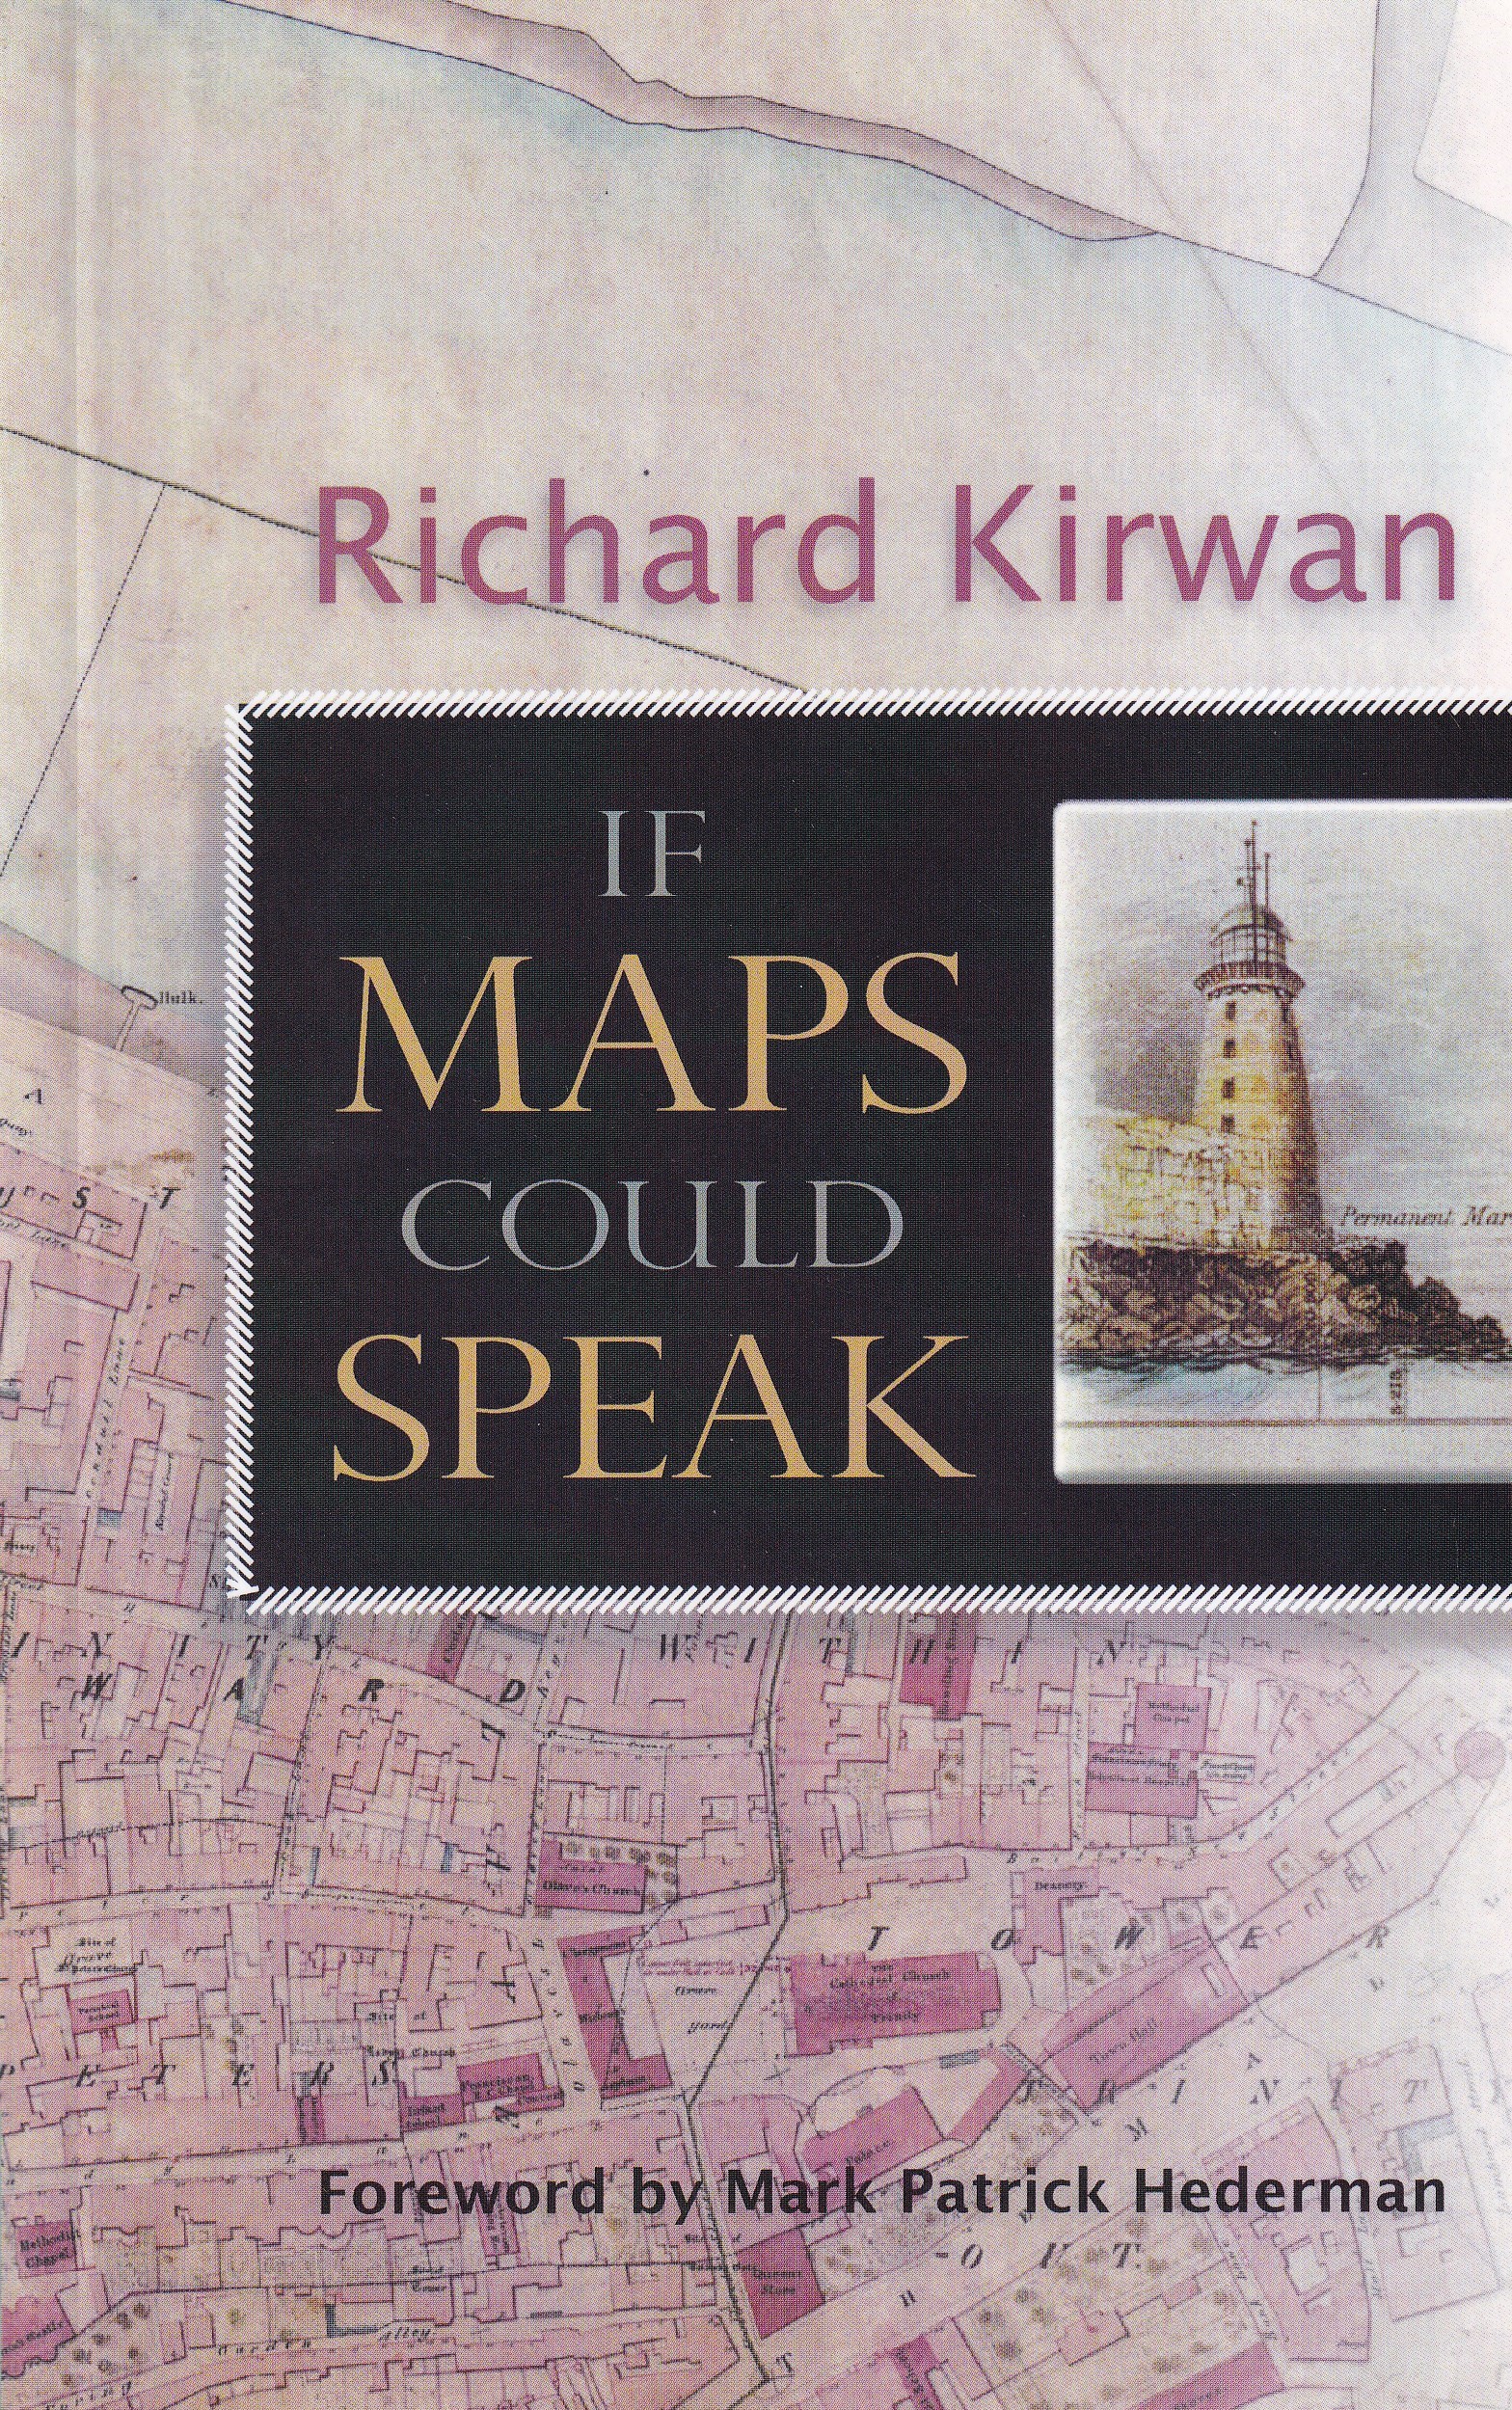 If Maps Could Speak by Richard Kirwan